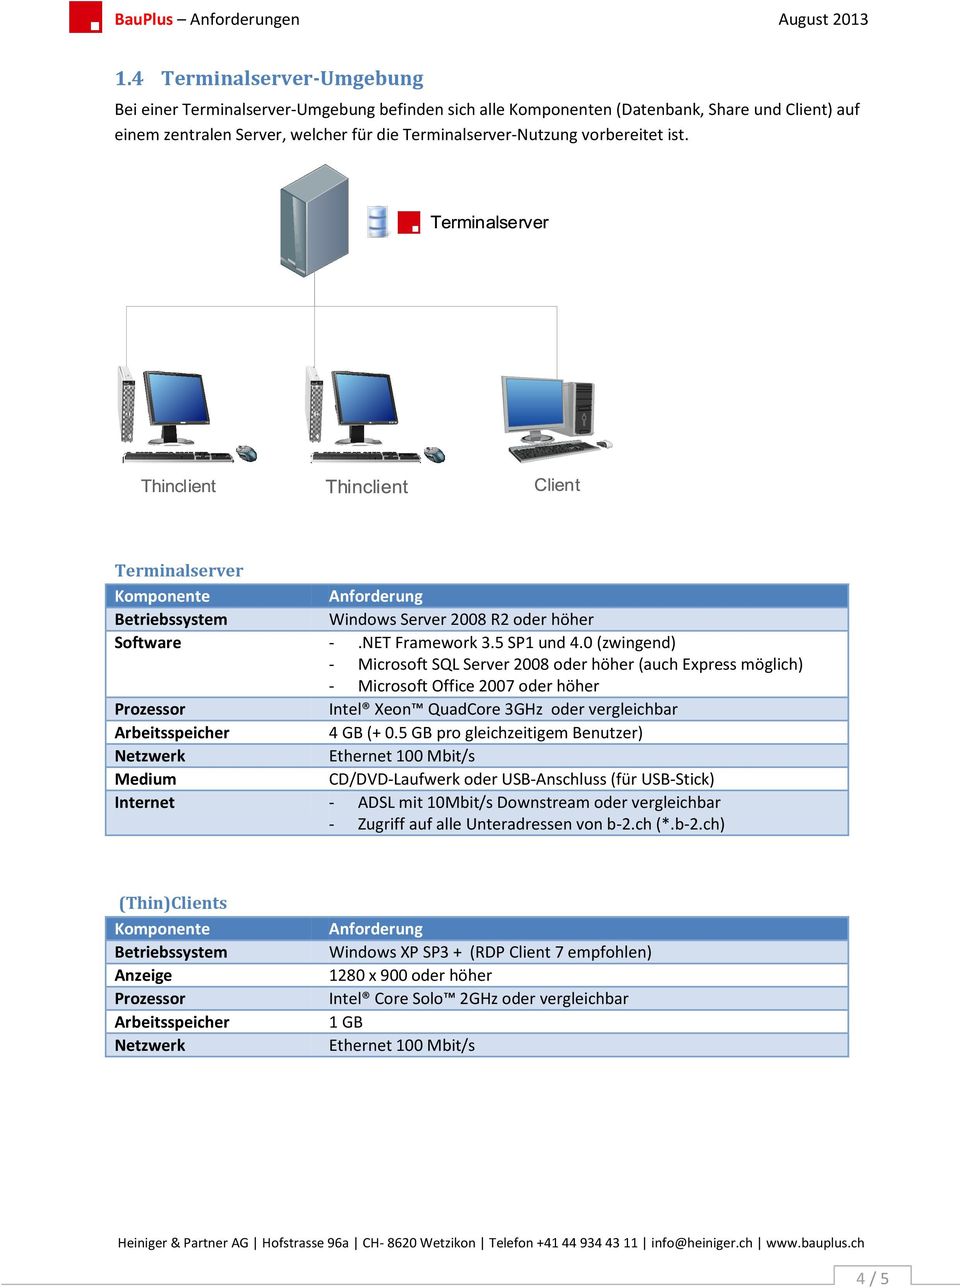 Terminalserver Intel Xeon QuadCore 3GHz oder vergleichbar (+ 0.